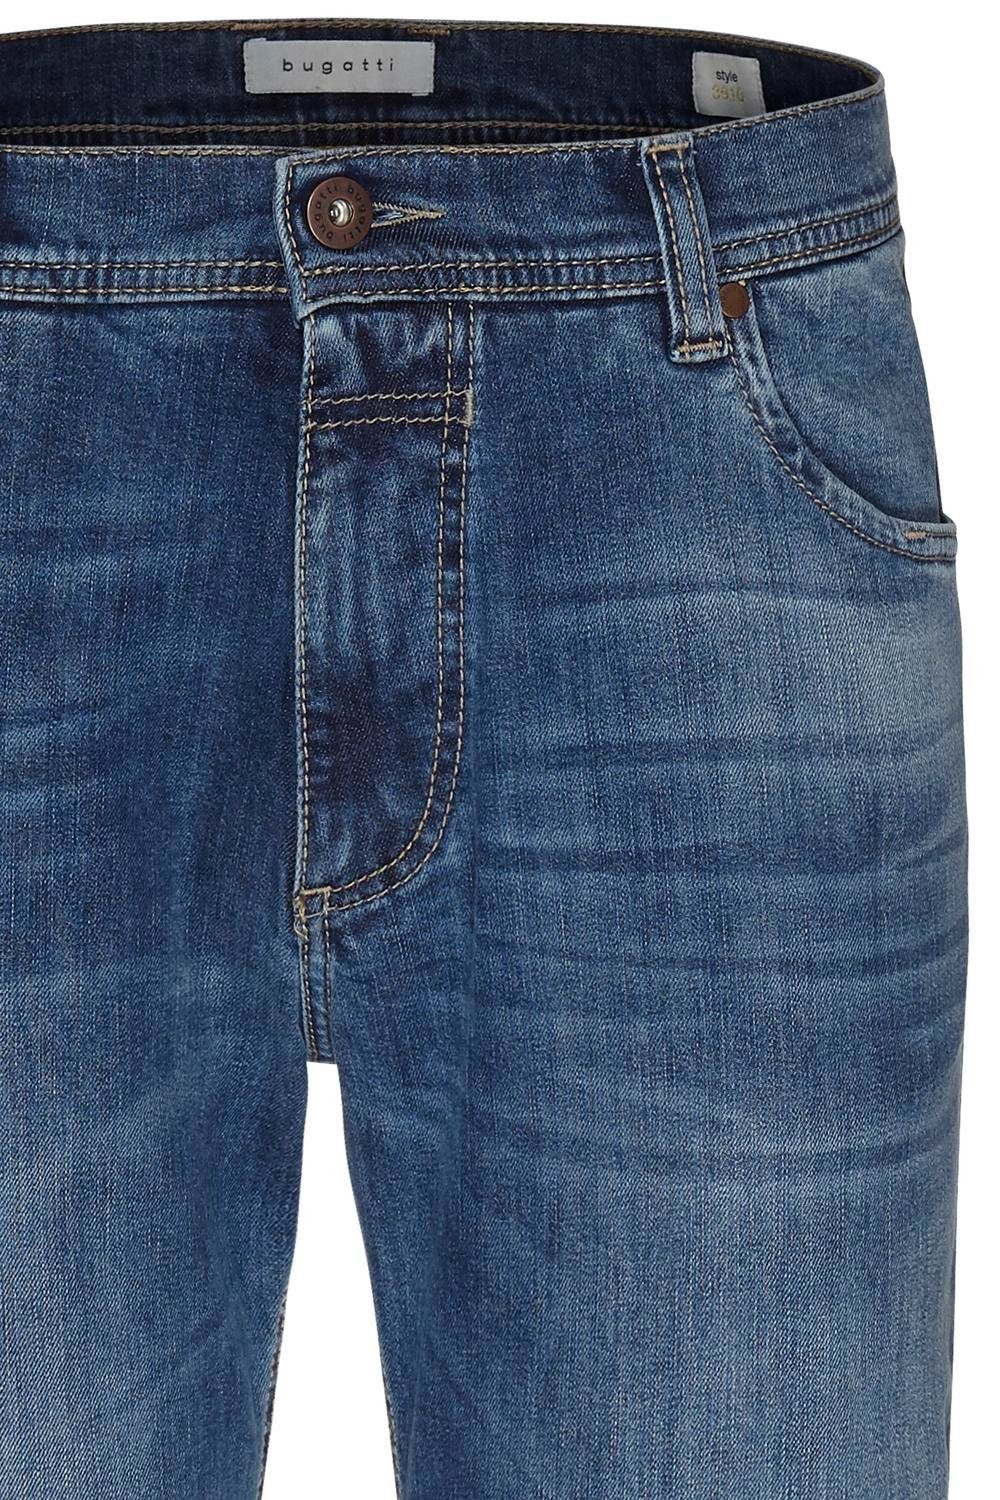 bugatti Regular-fit-Jeans HERREN JEANS